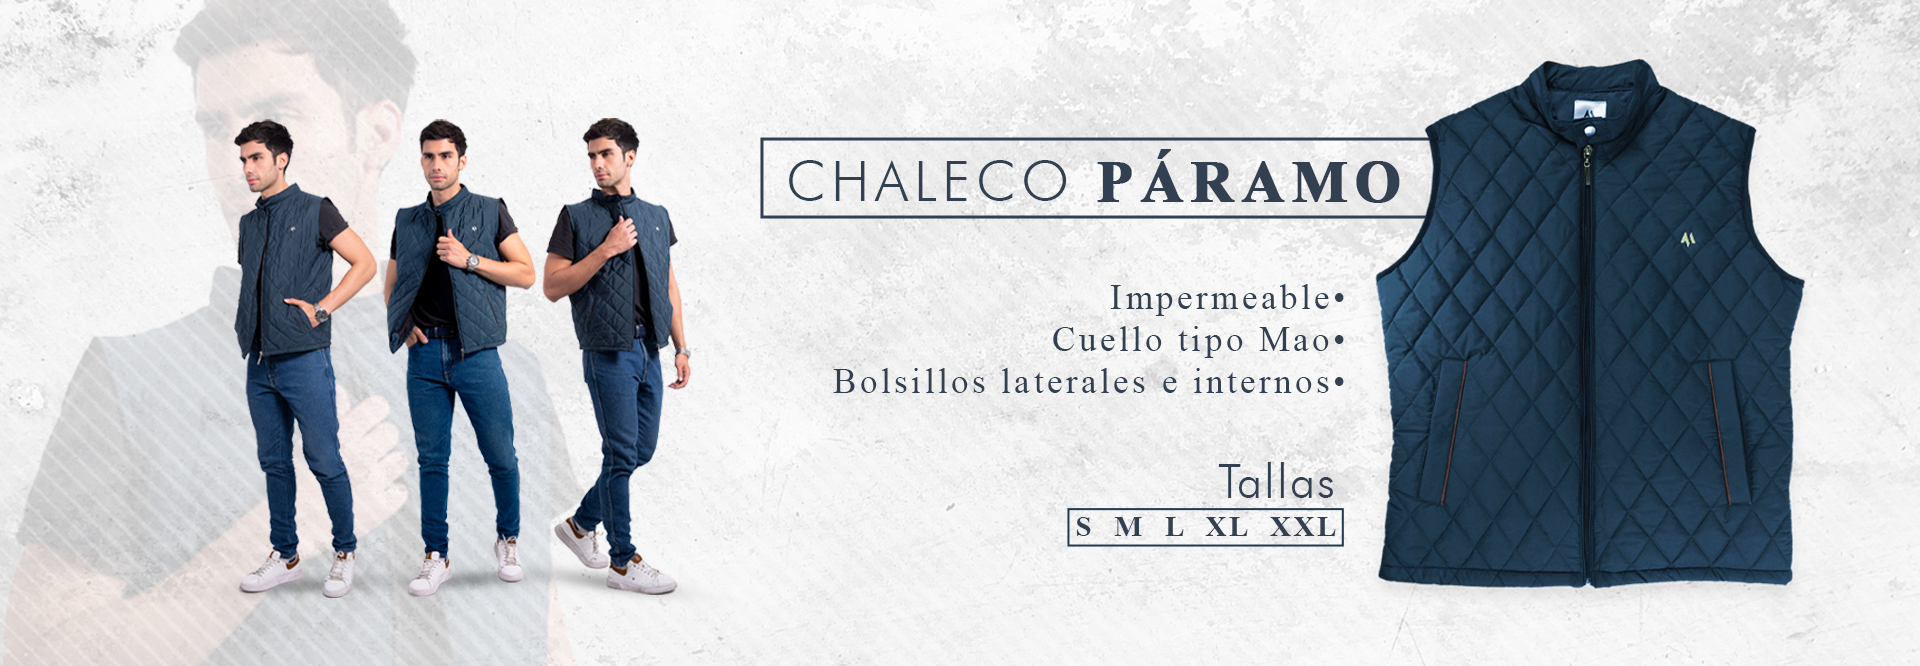 BANNER_CHALECO_PARAMO